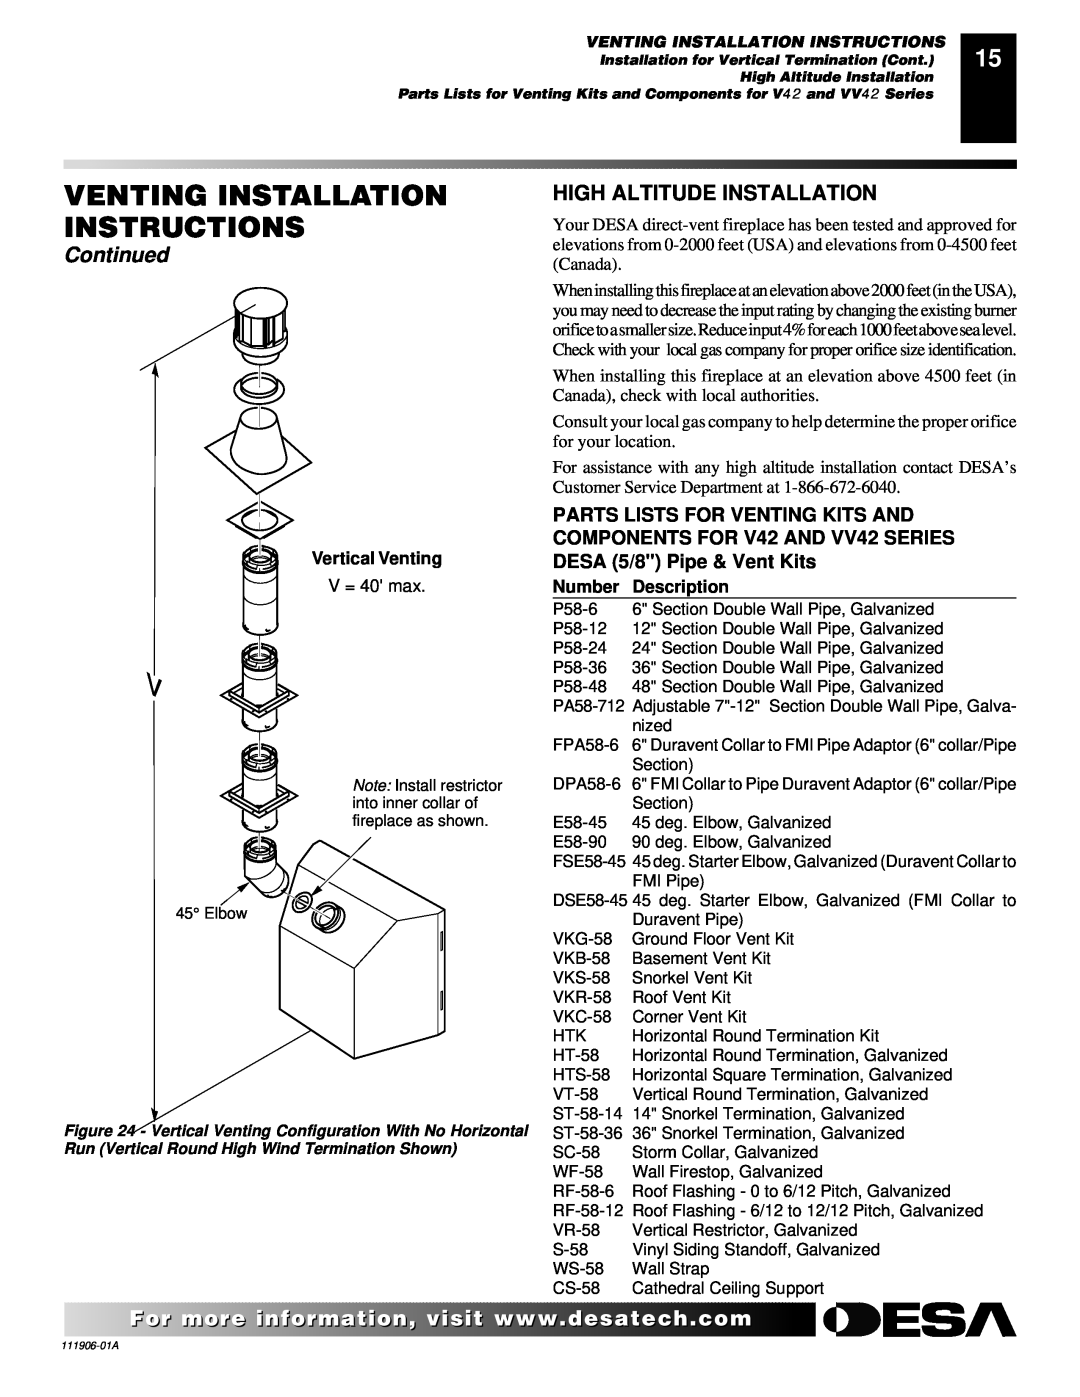 Desa (V)V42NA(1) Venting Installation Instructions, Continued, High Altitude Installation, Vertical Venting, Number 